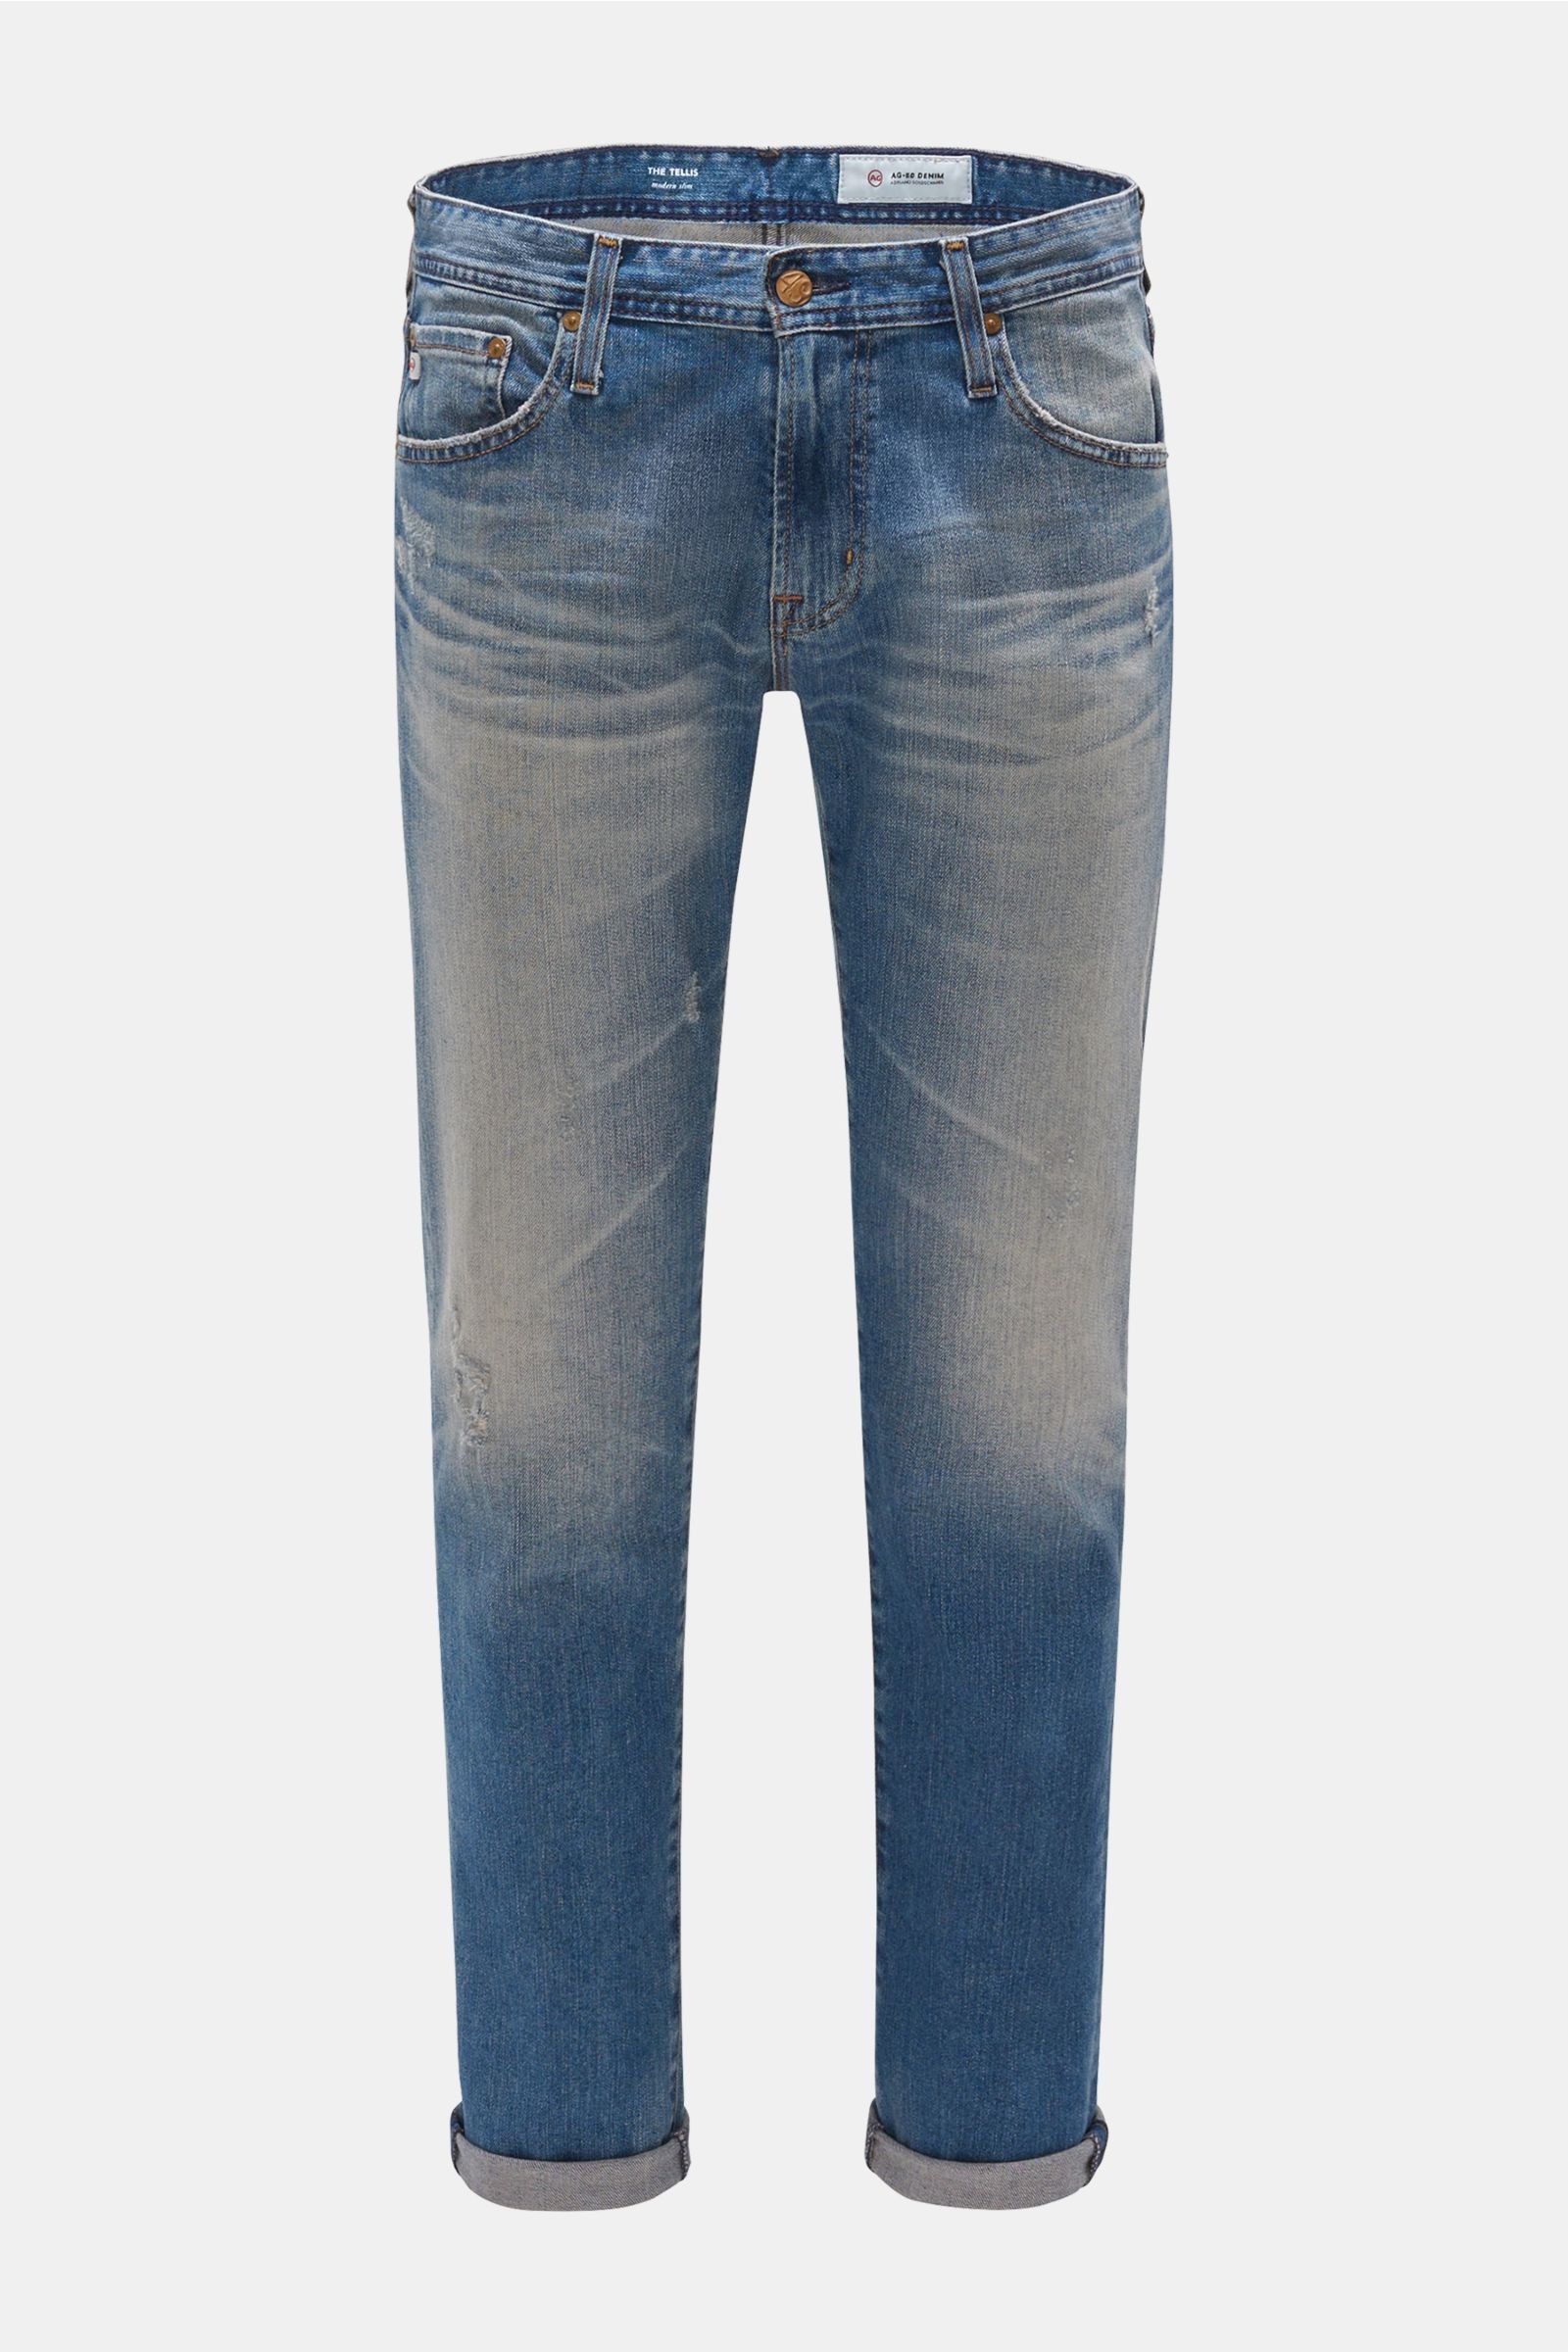 Jeans 'The Tellis Modern Slim' grey-blue